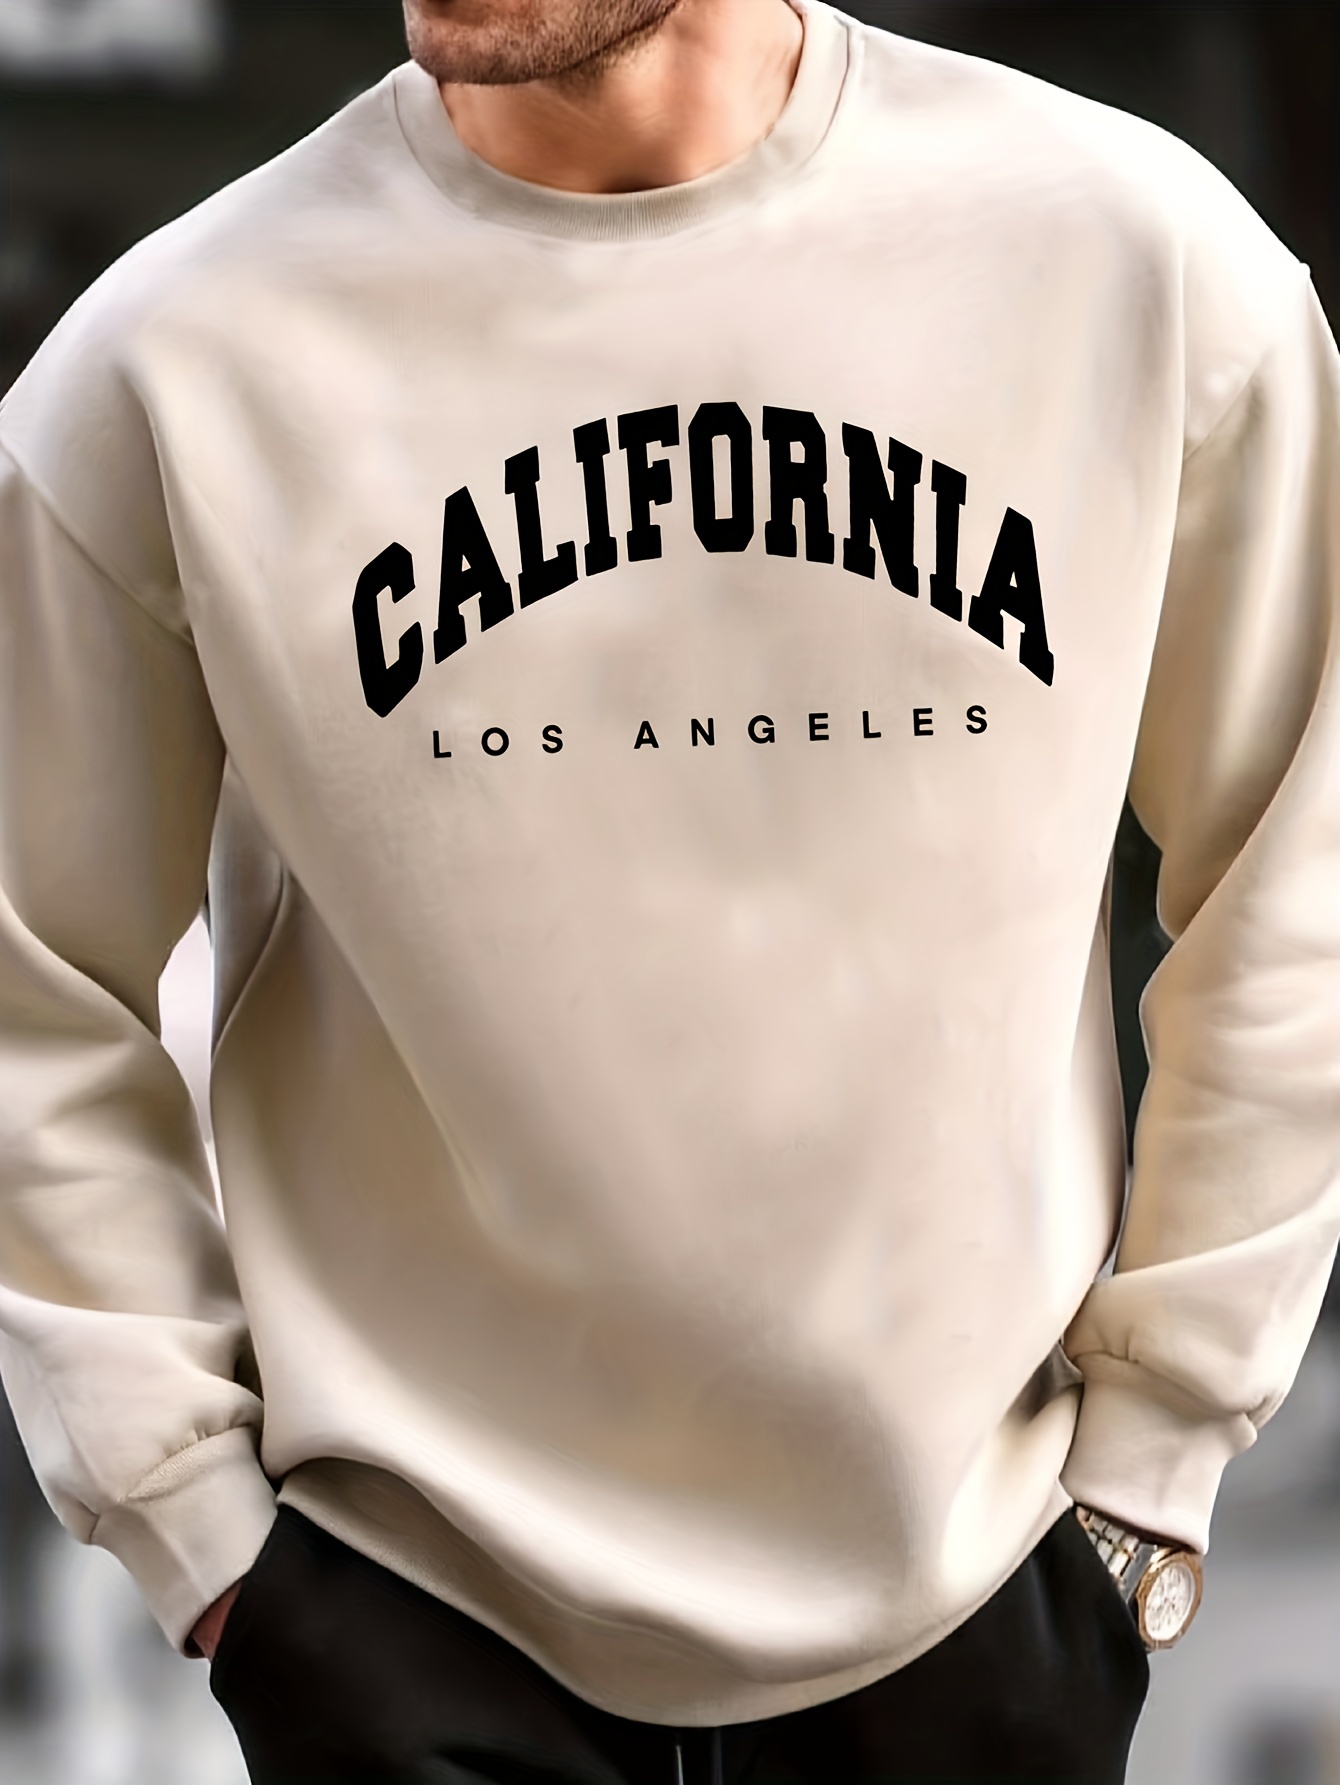 Los Angeles Sweatshirt Los Angeles California Print Trendy